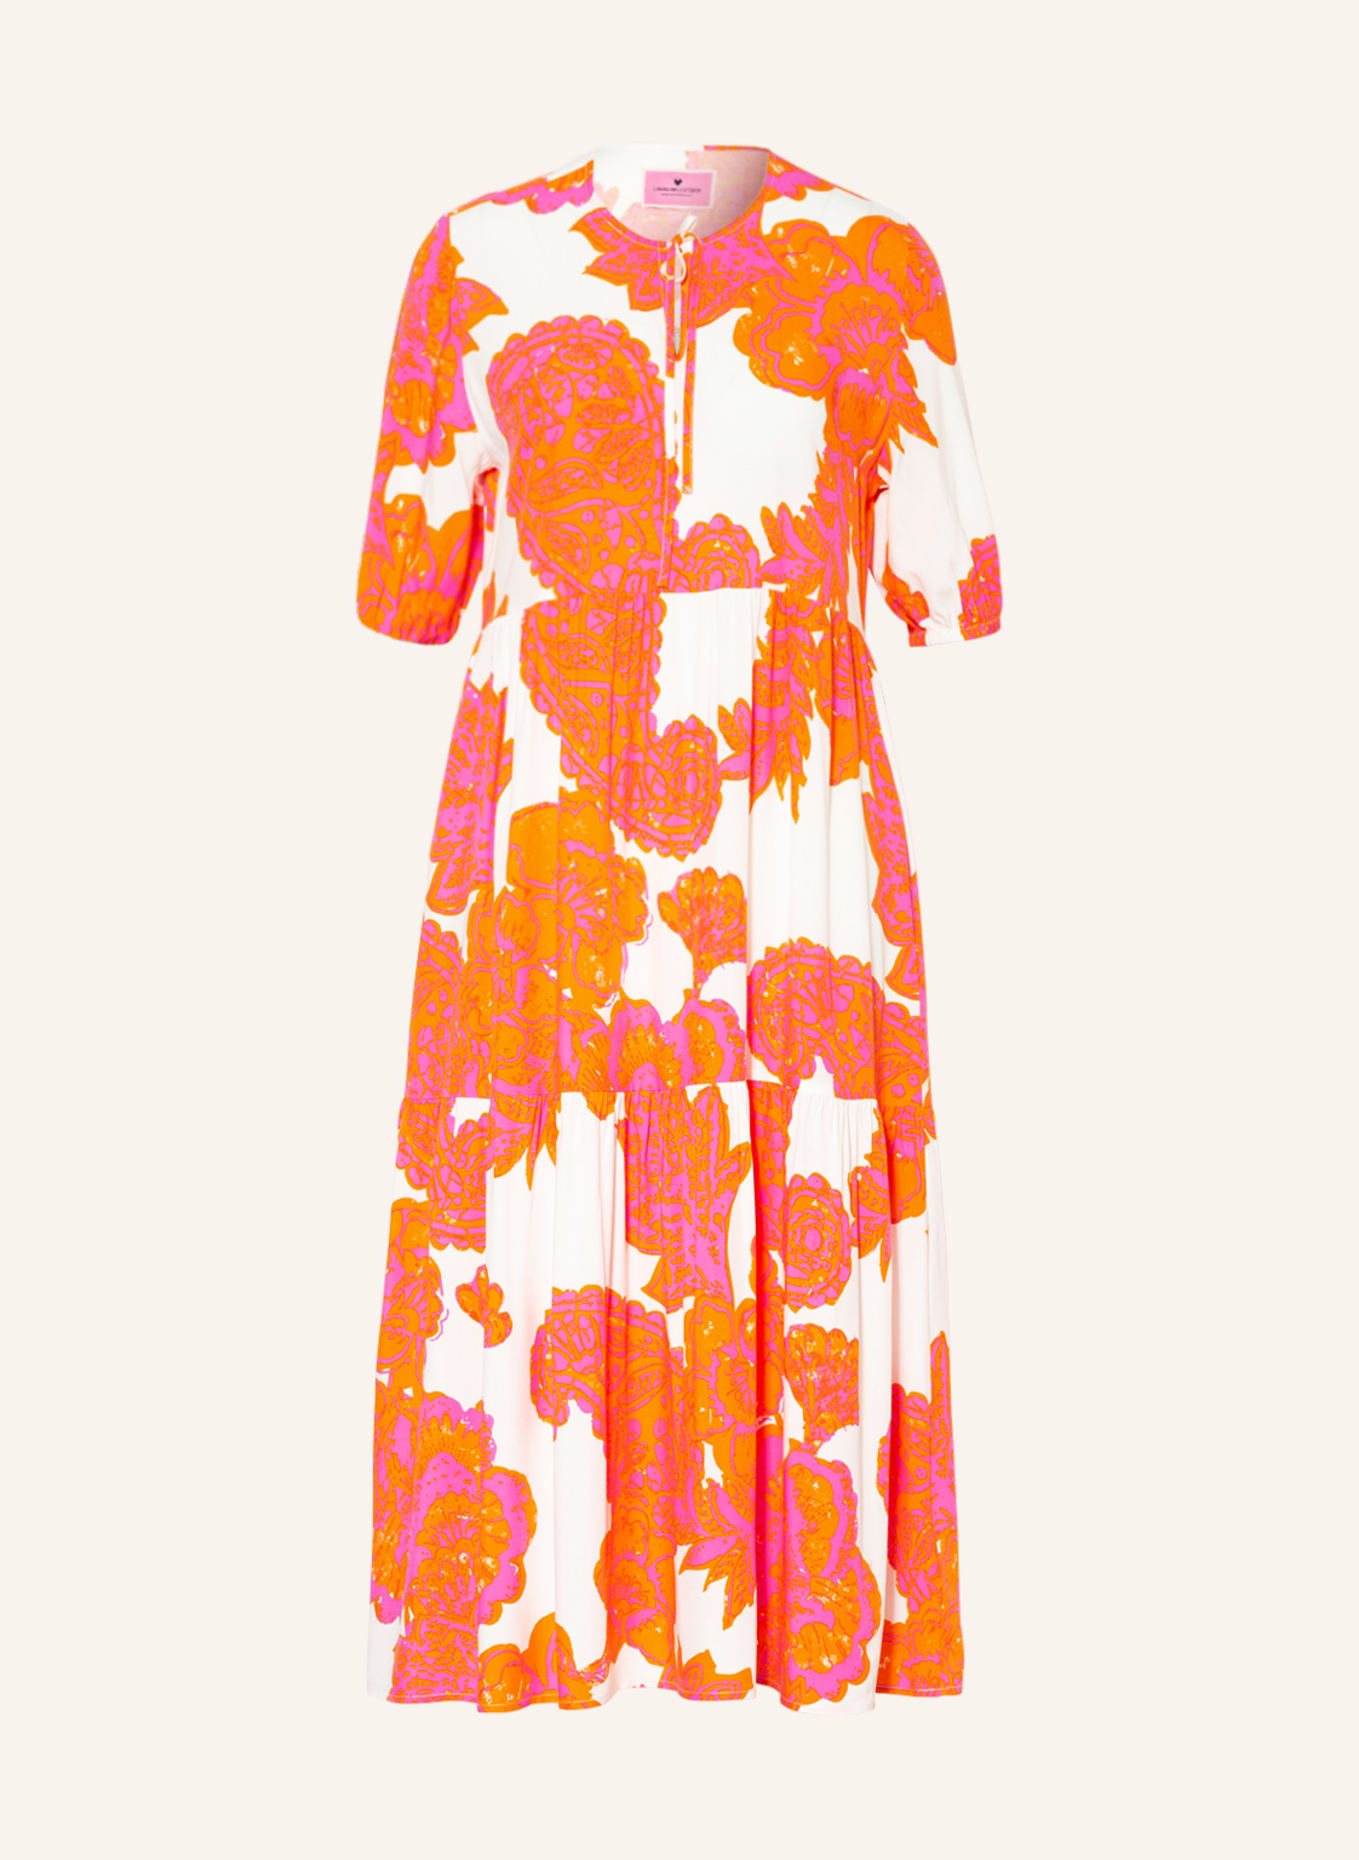 weiss/ ROZANAL LIEBLINGSSTÜCK pink orange/ Kleid in